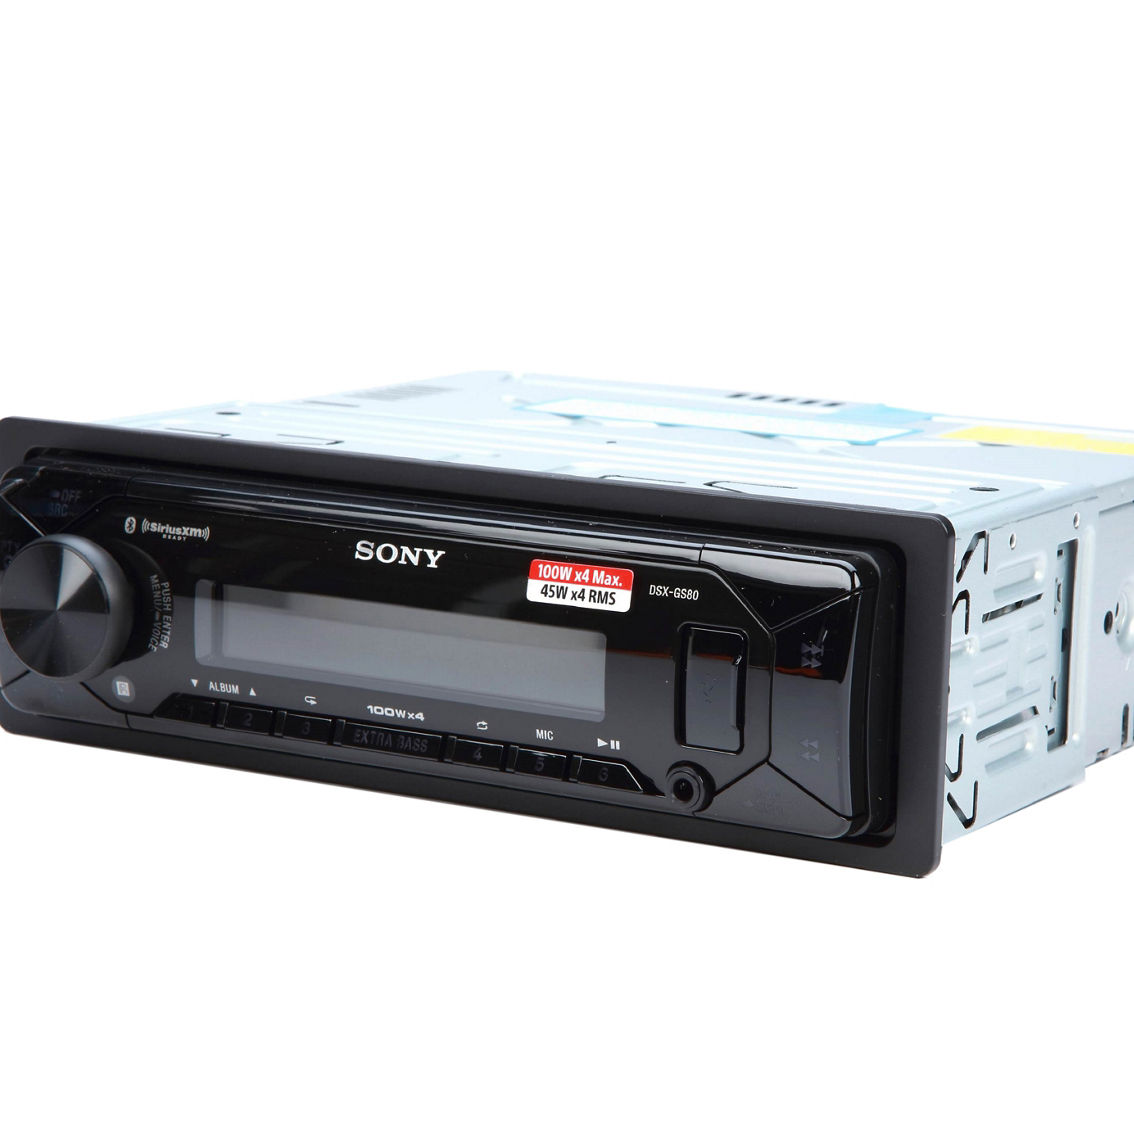 Sony DSXGS80 GS Series High Power 45W x 4 RMS Digital Media Receiver - Image 3 of 6